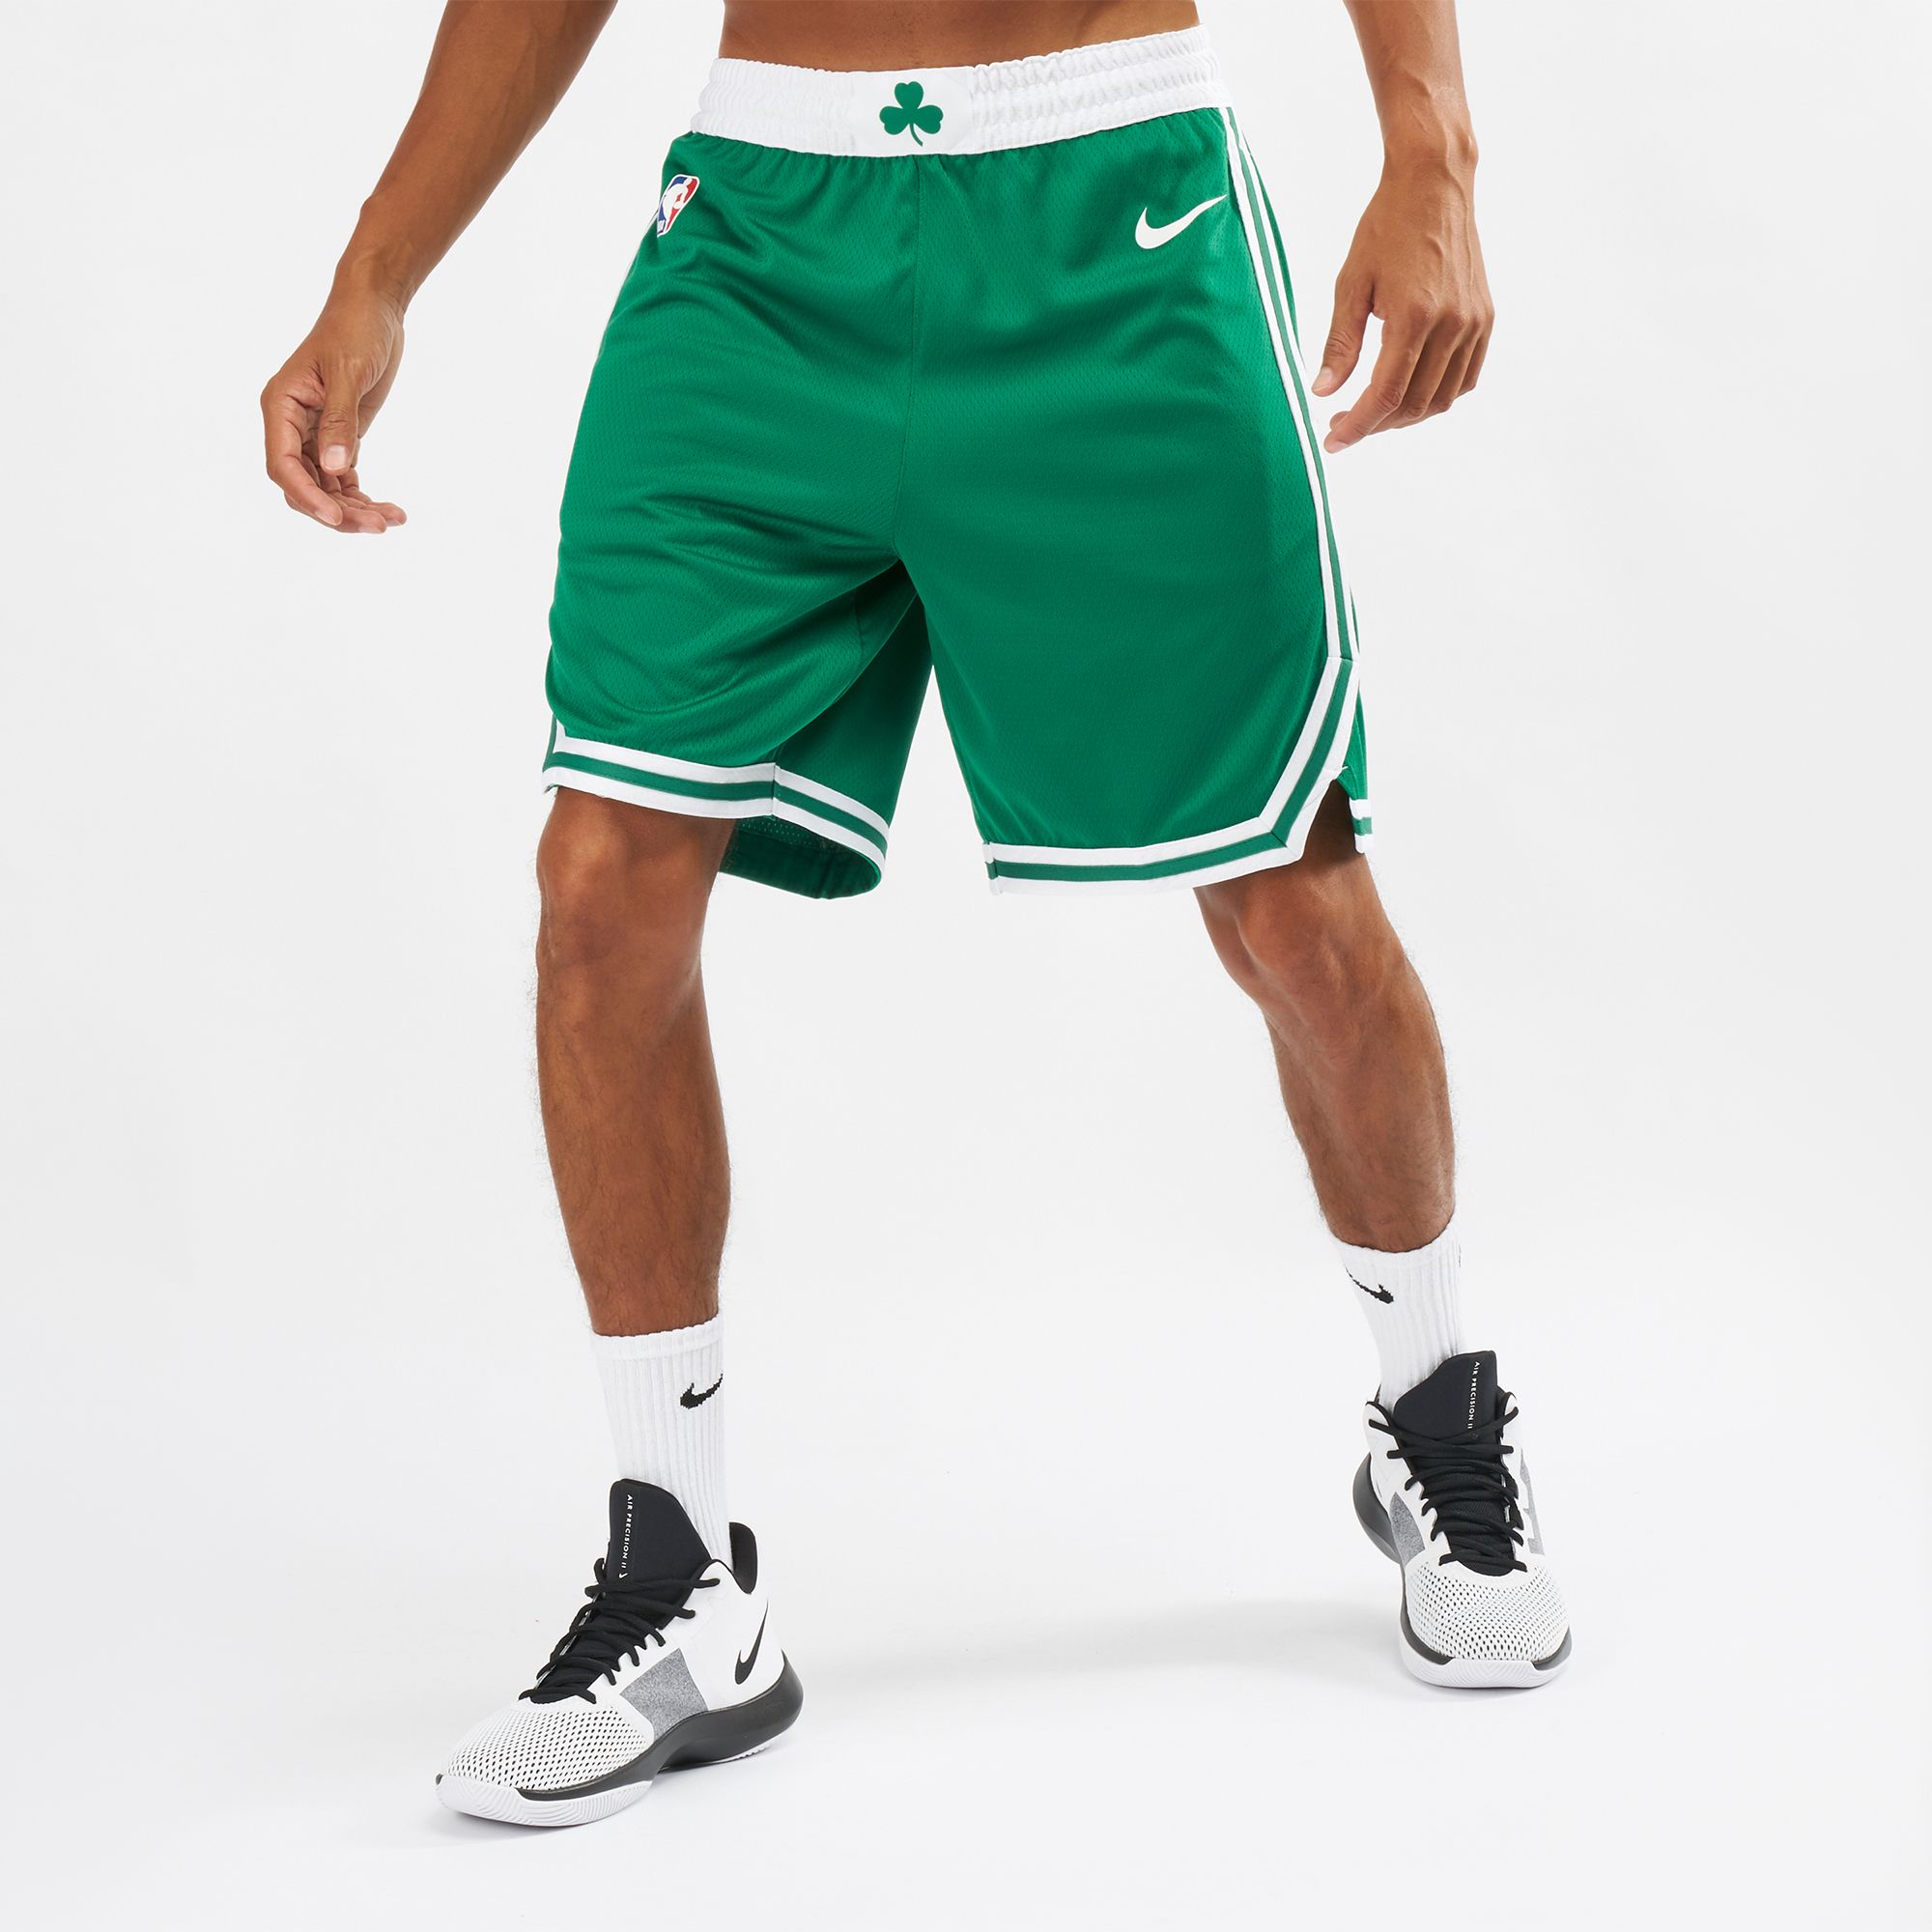 Boston Celtics Shorts / All the best boston celtics gear and ...